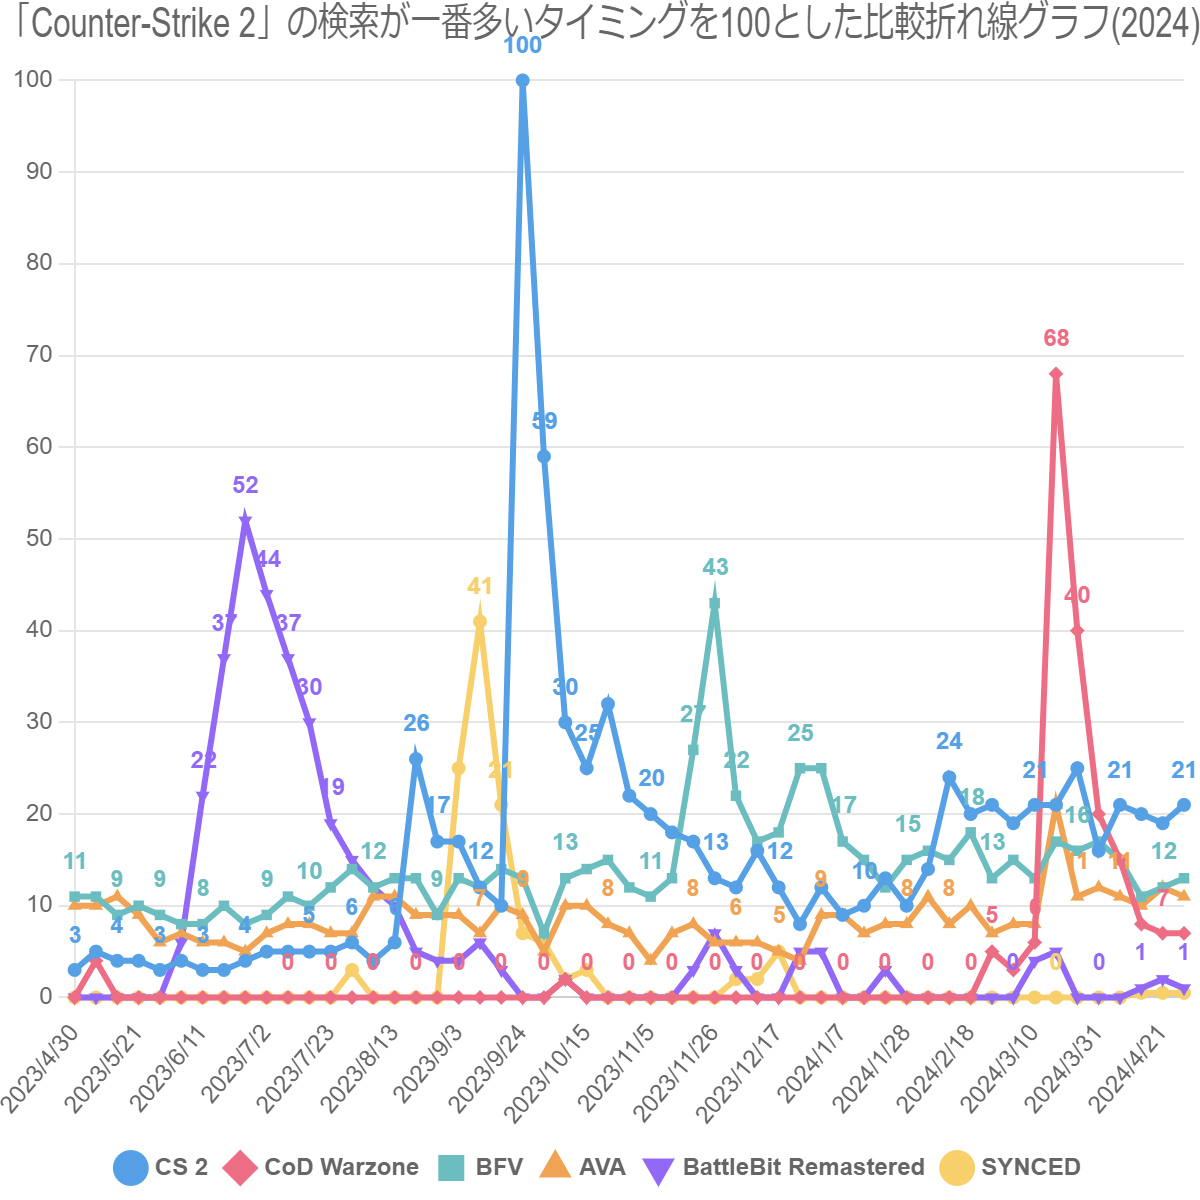 「Counter-Strike 2」の検索が一番多いタイミングを100とした比較折れ線グラフ(2024)